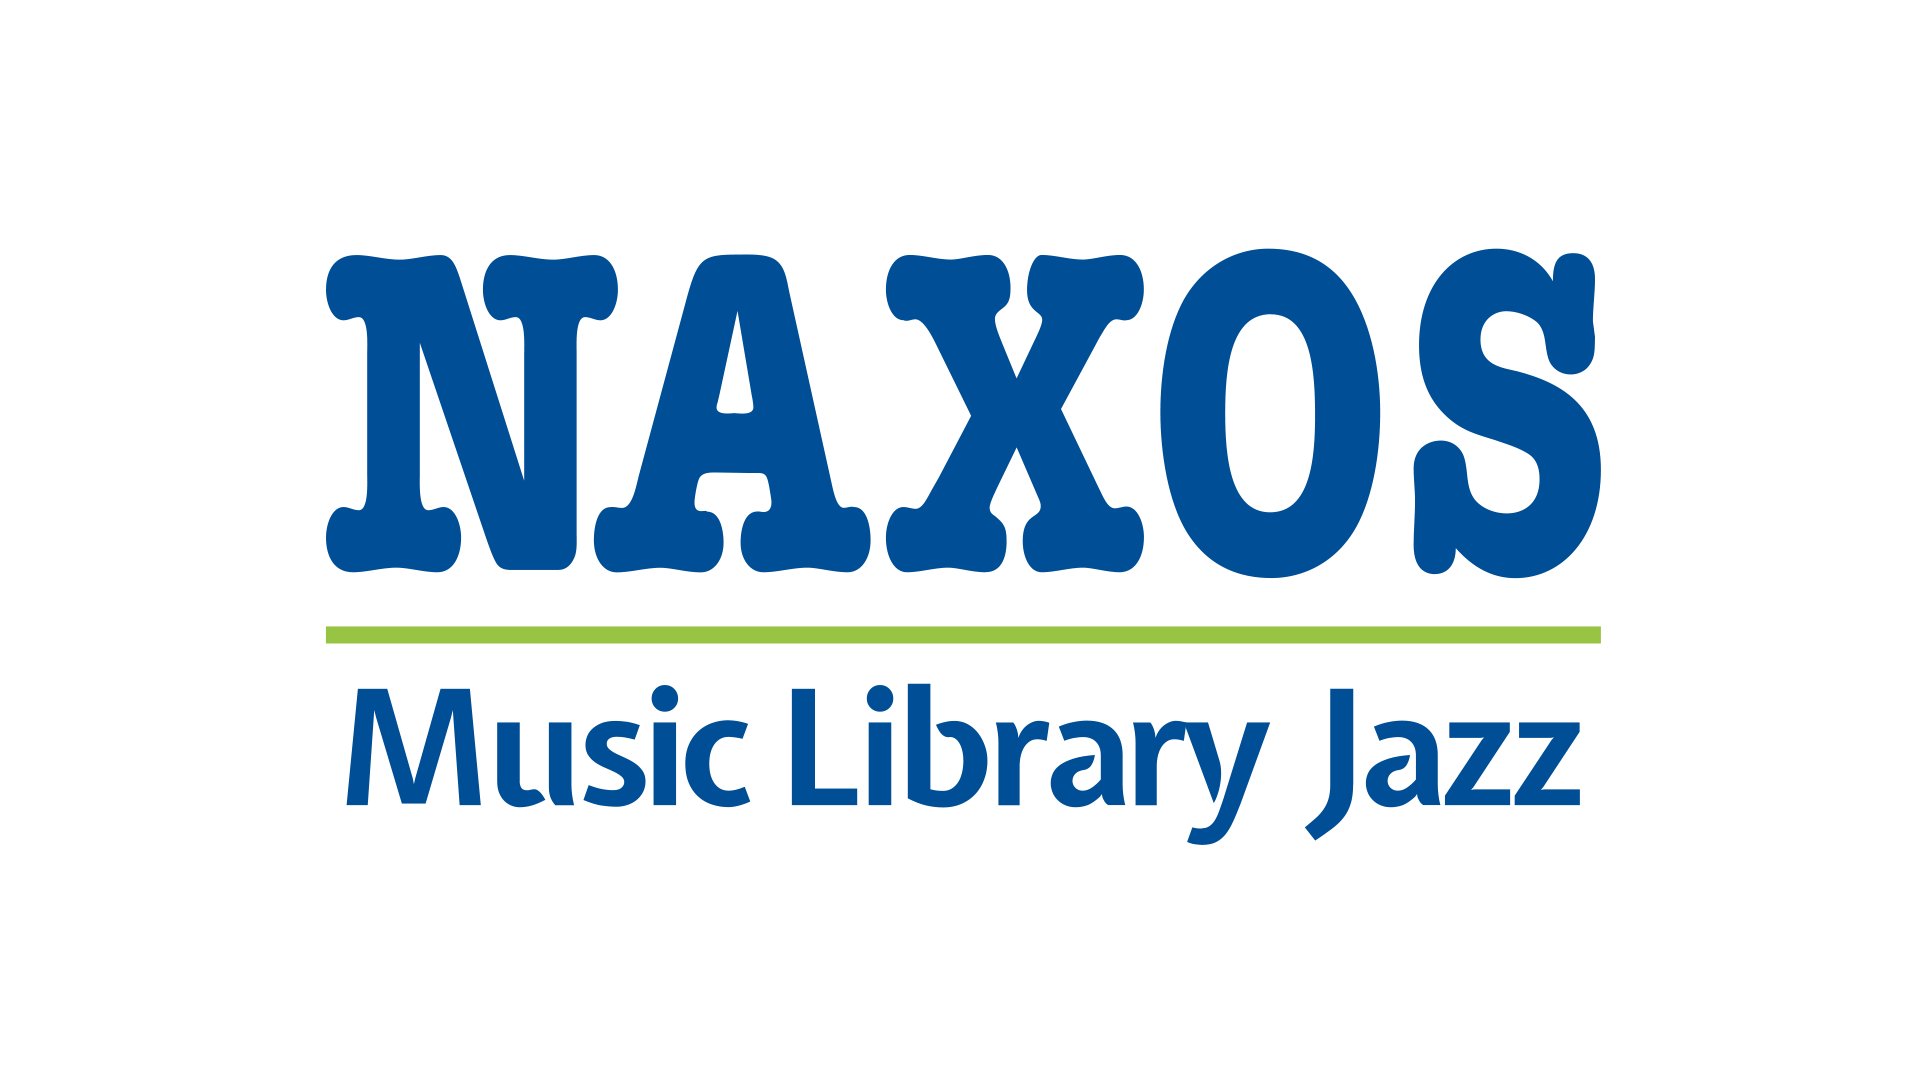 Sigla Naxos Music Library Jazz